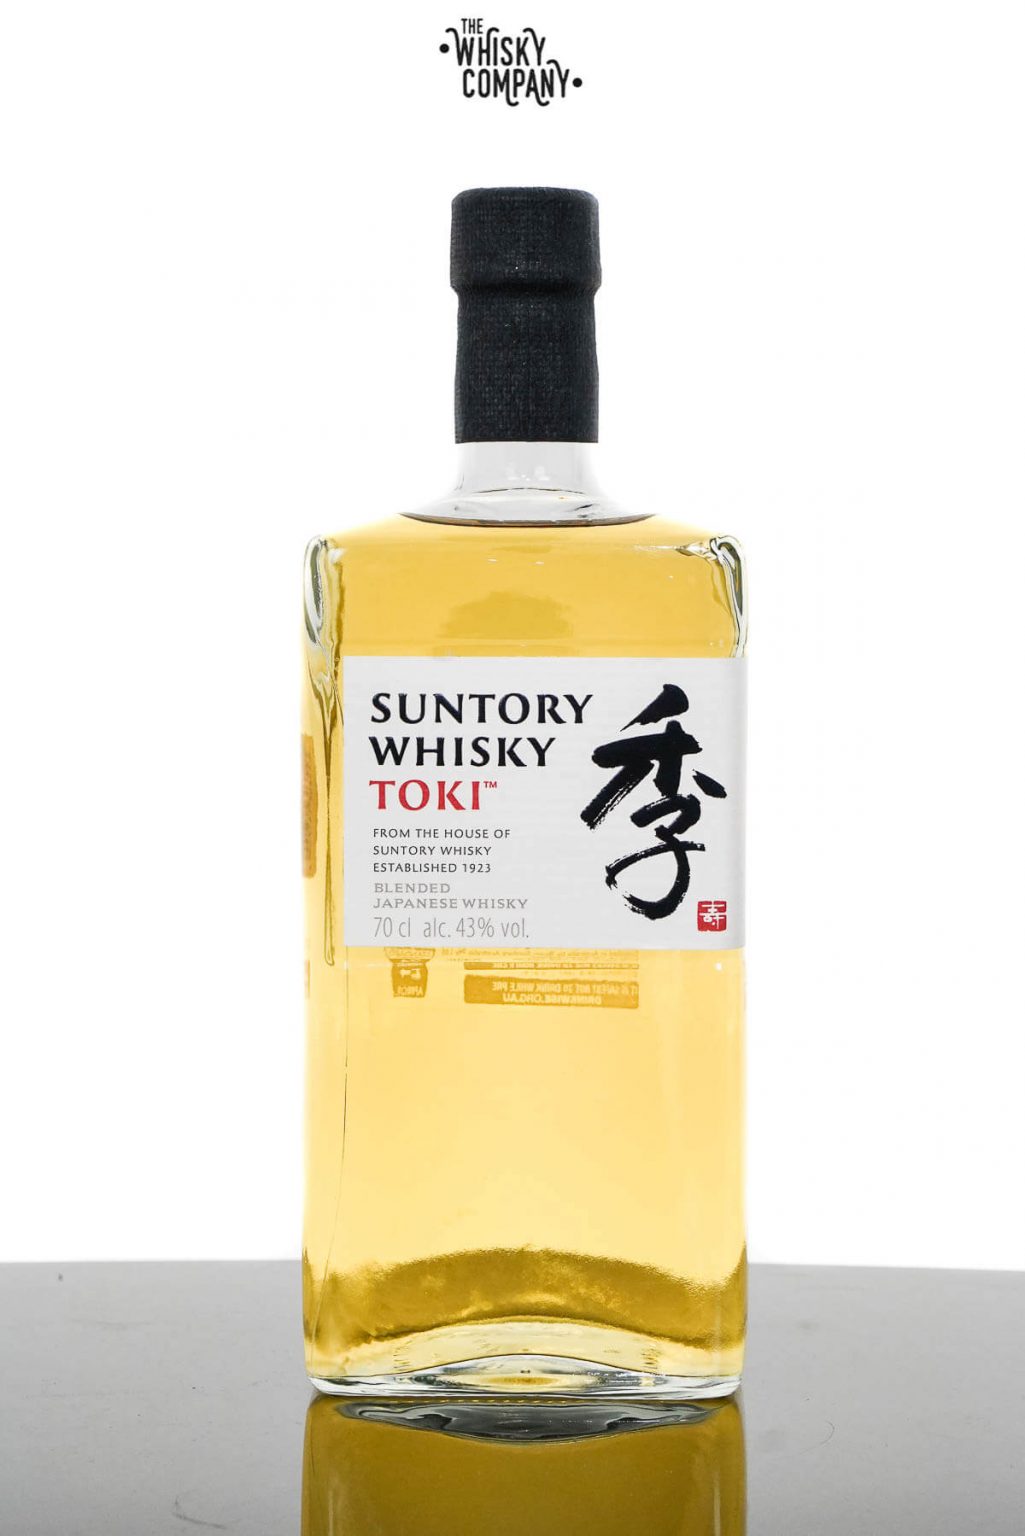 Suntory Toki Japanese Blended Whisky The Whisky Company